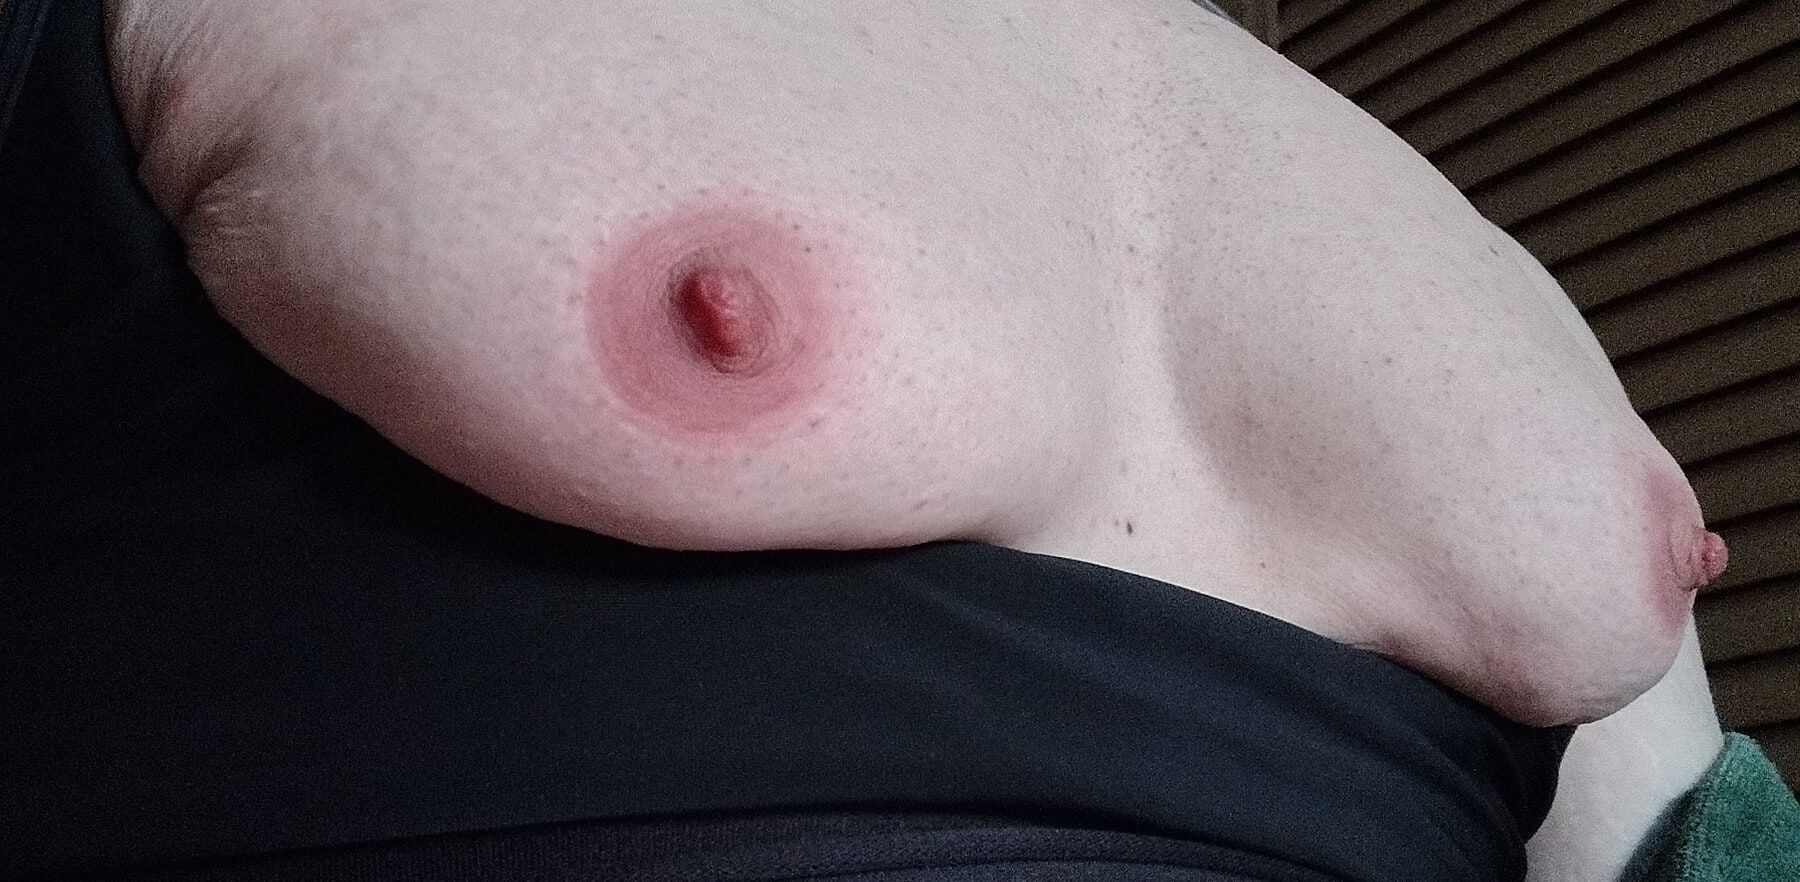 Pumped sissy tits boyboobs moobs gynecomastia gyno